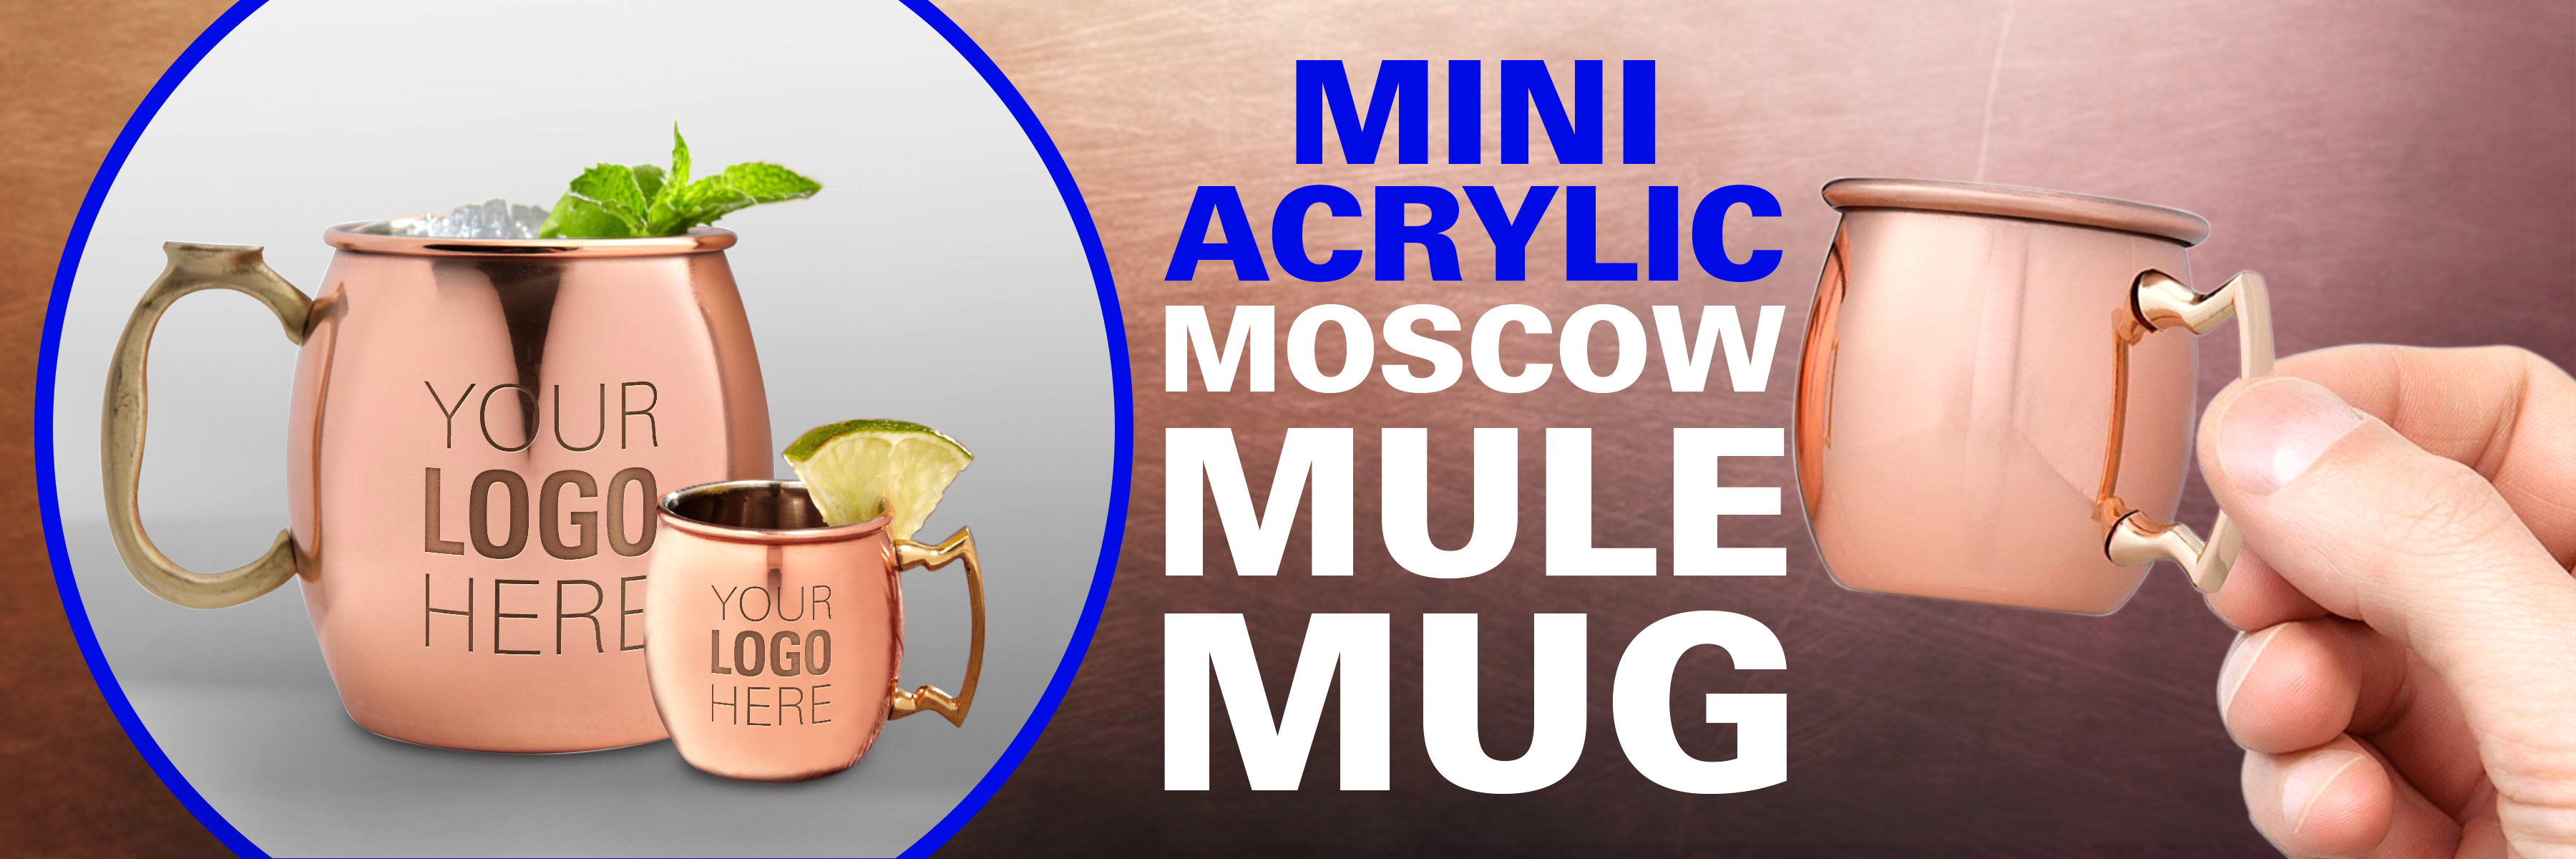 mini acrylic moscow mule mug